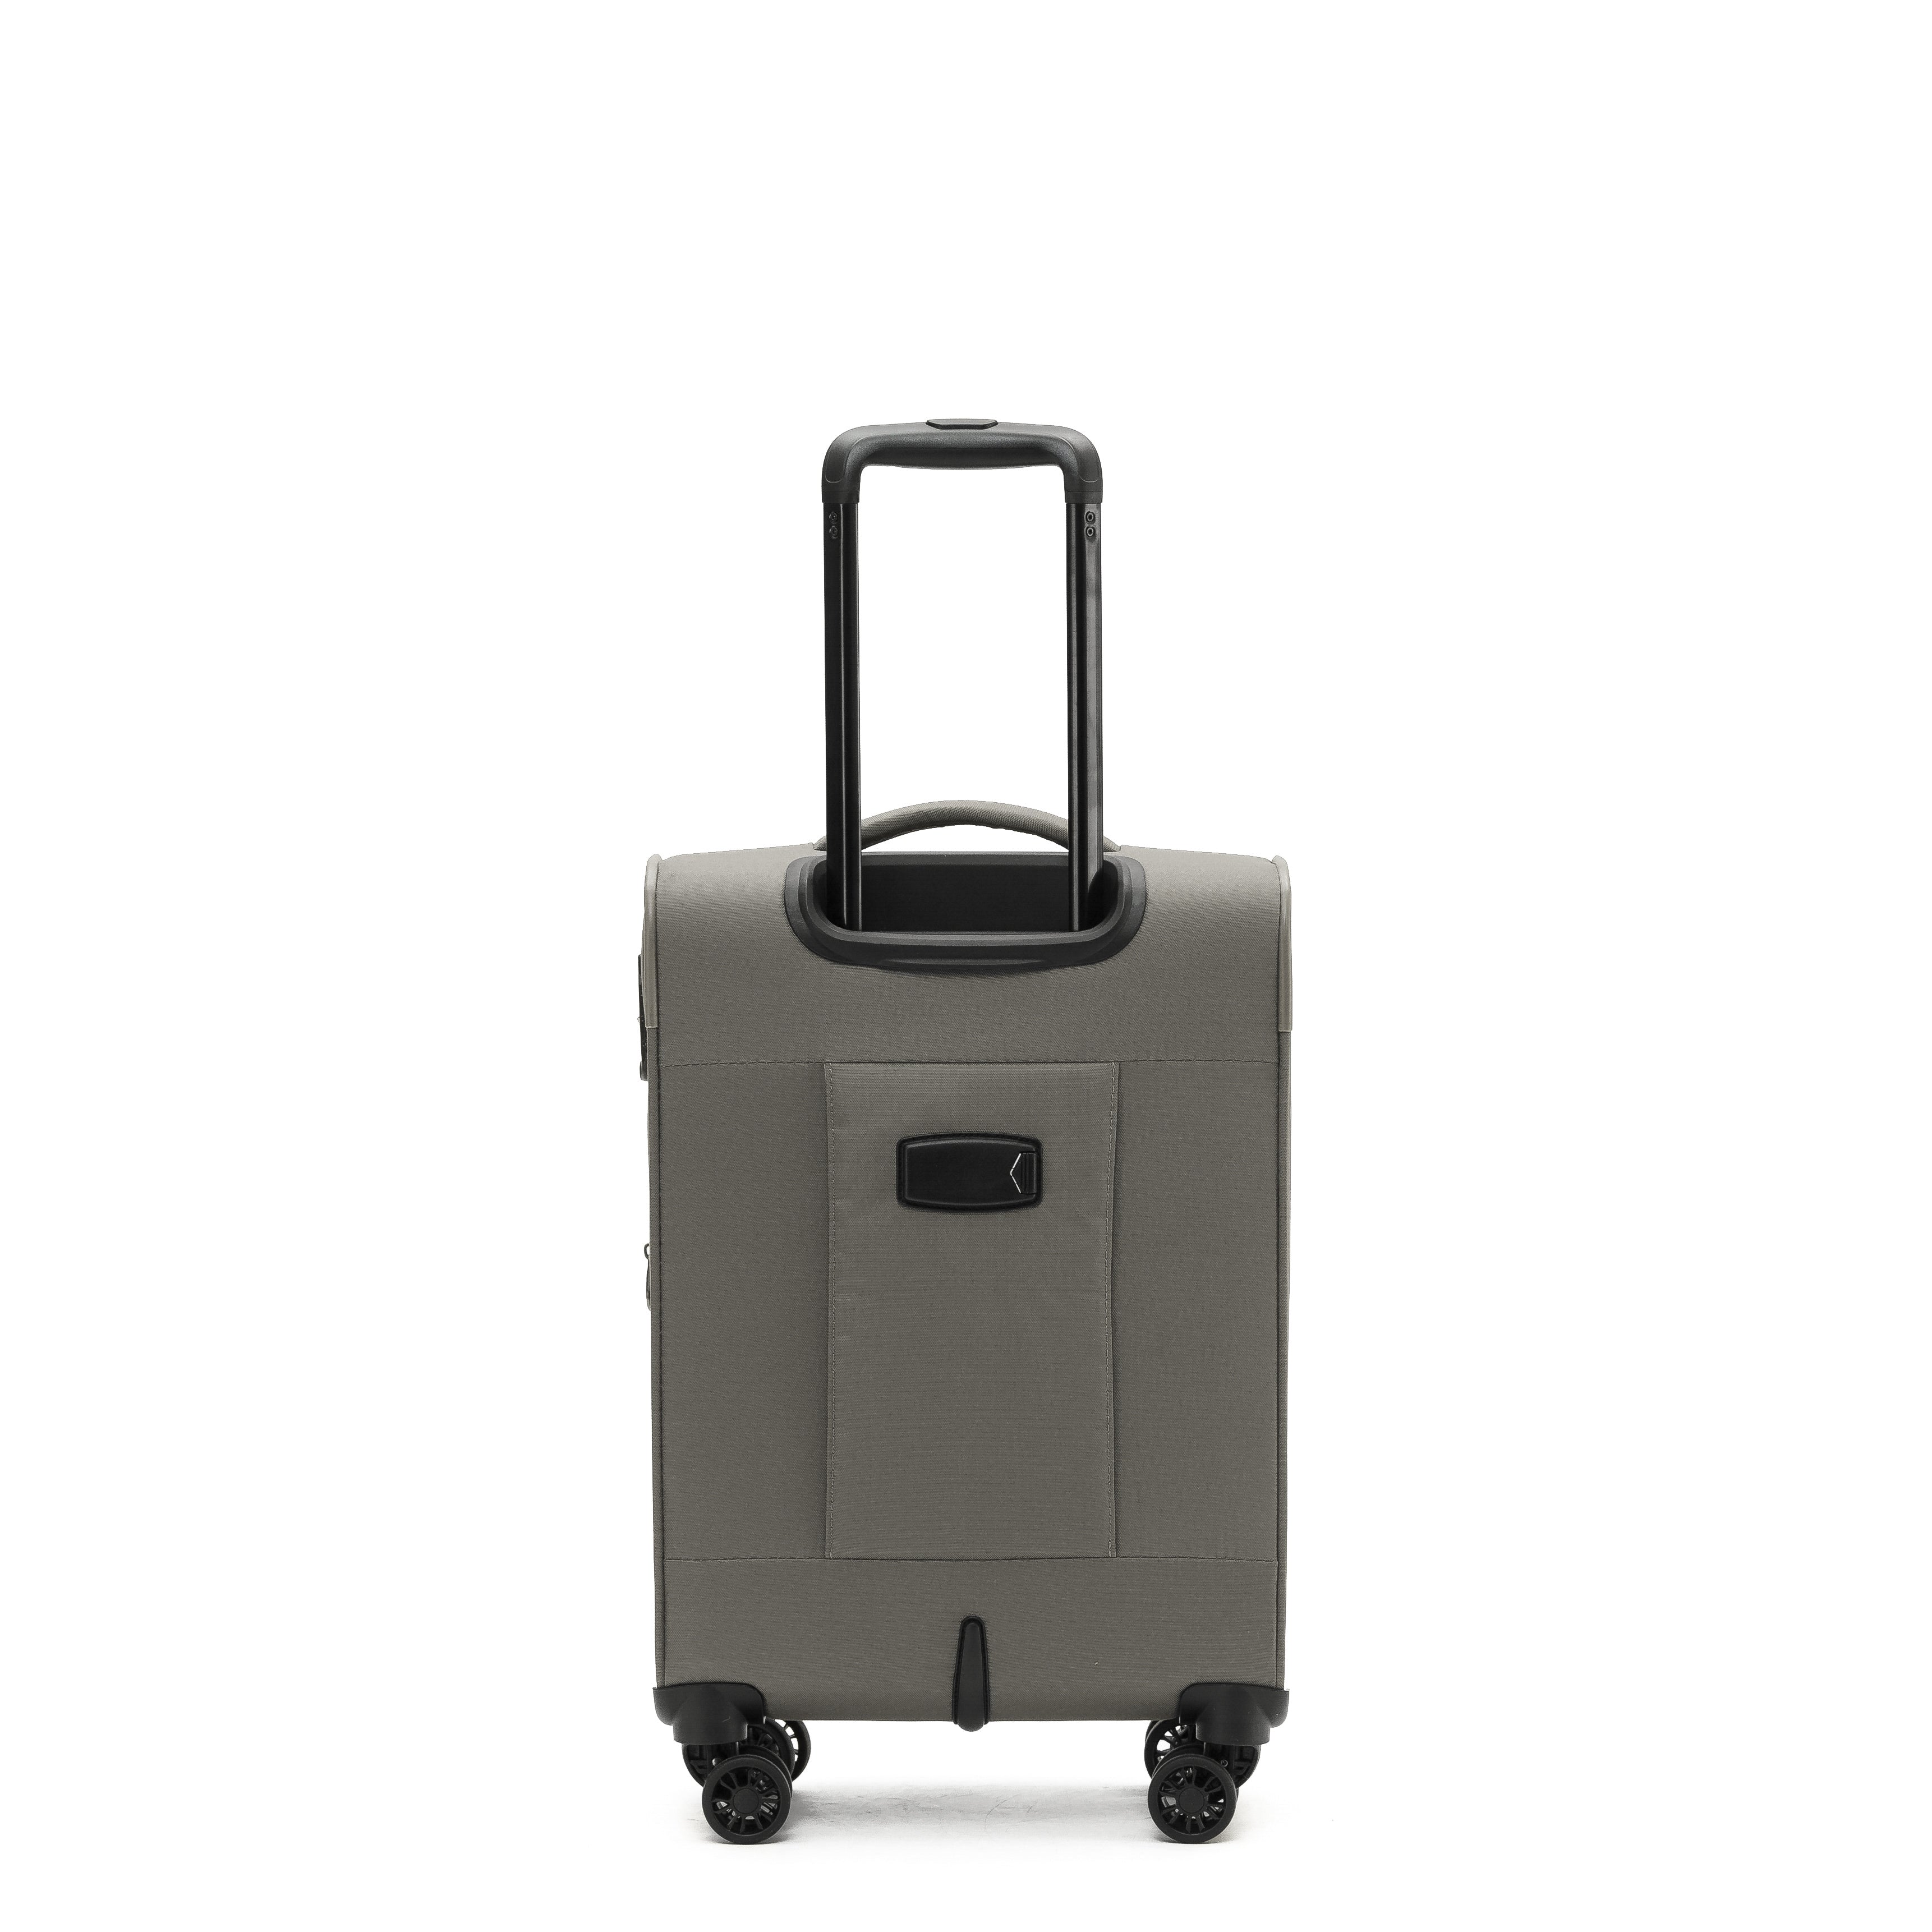 Tosca - Aviator 2.0 set of 3 suitcases (L-M-S) - Khaki-7